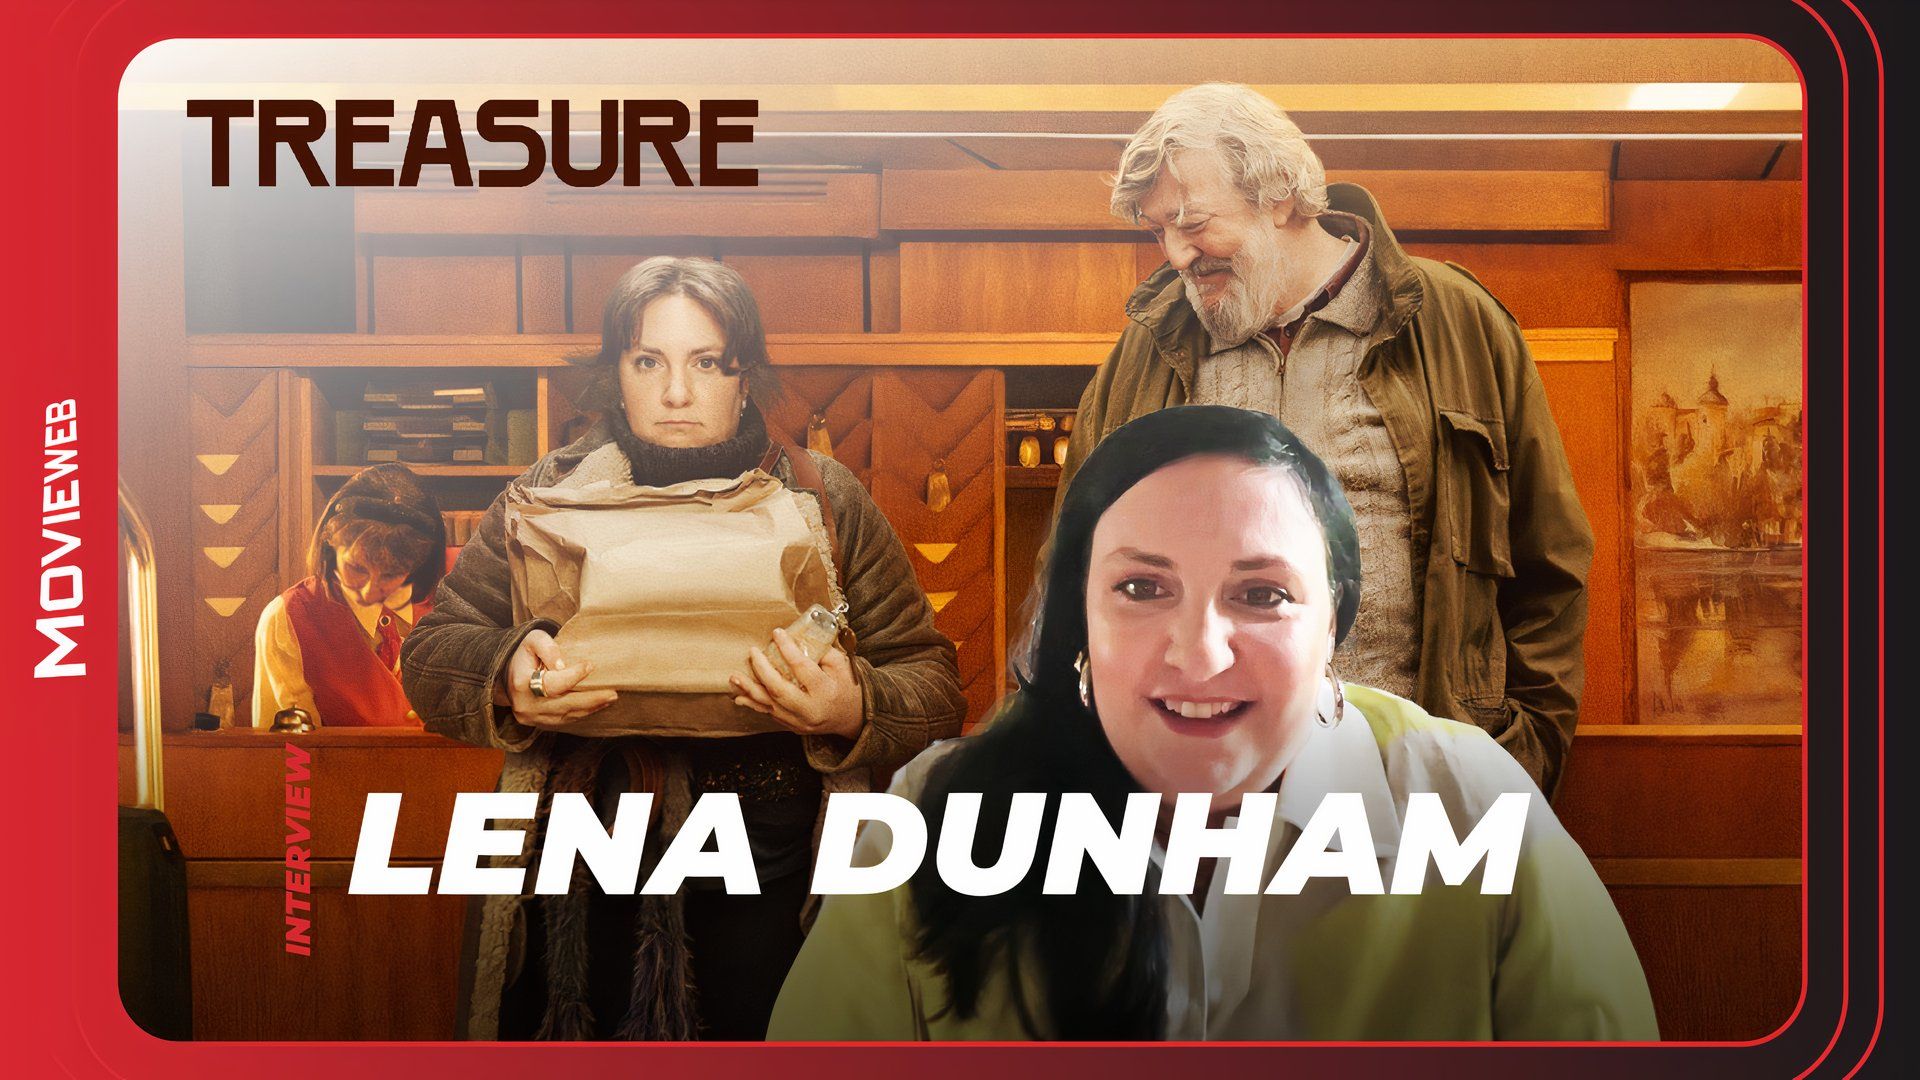 Lena Dunham Praises Treasure Co-Star Stephen Fry